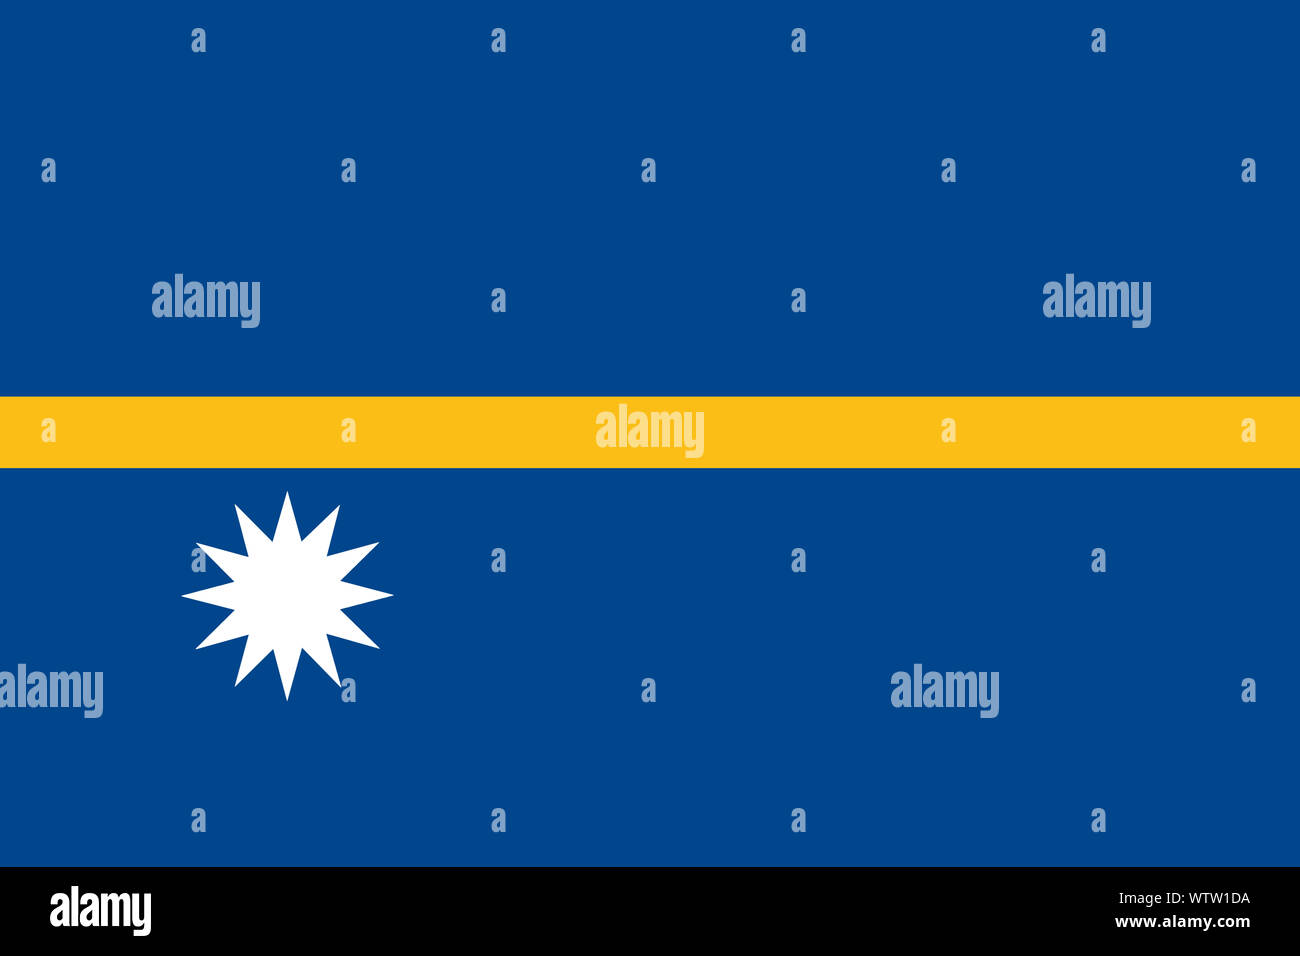 A Nauru Flag Background Illustration Blue Yellow Stripe White Star Stock Photo Alamy